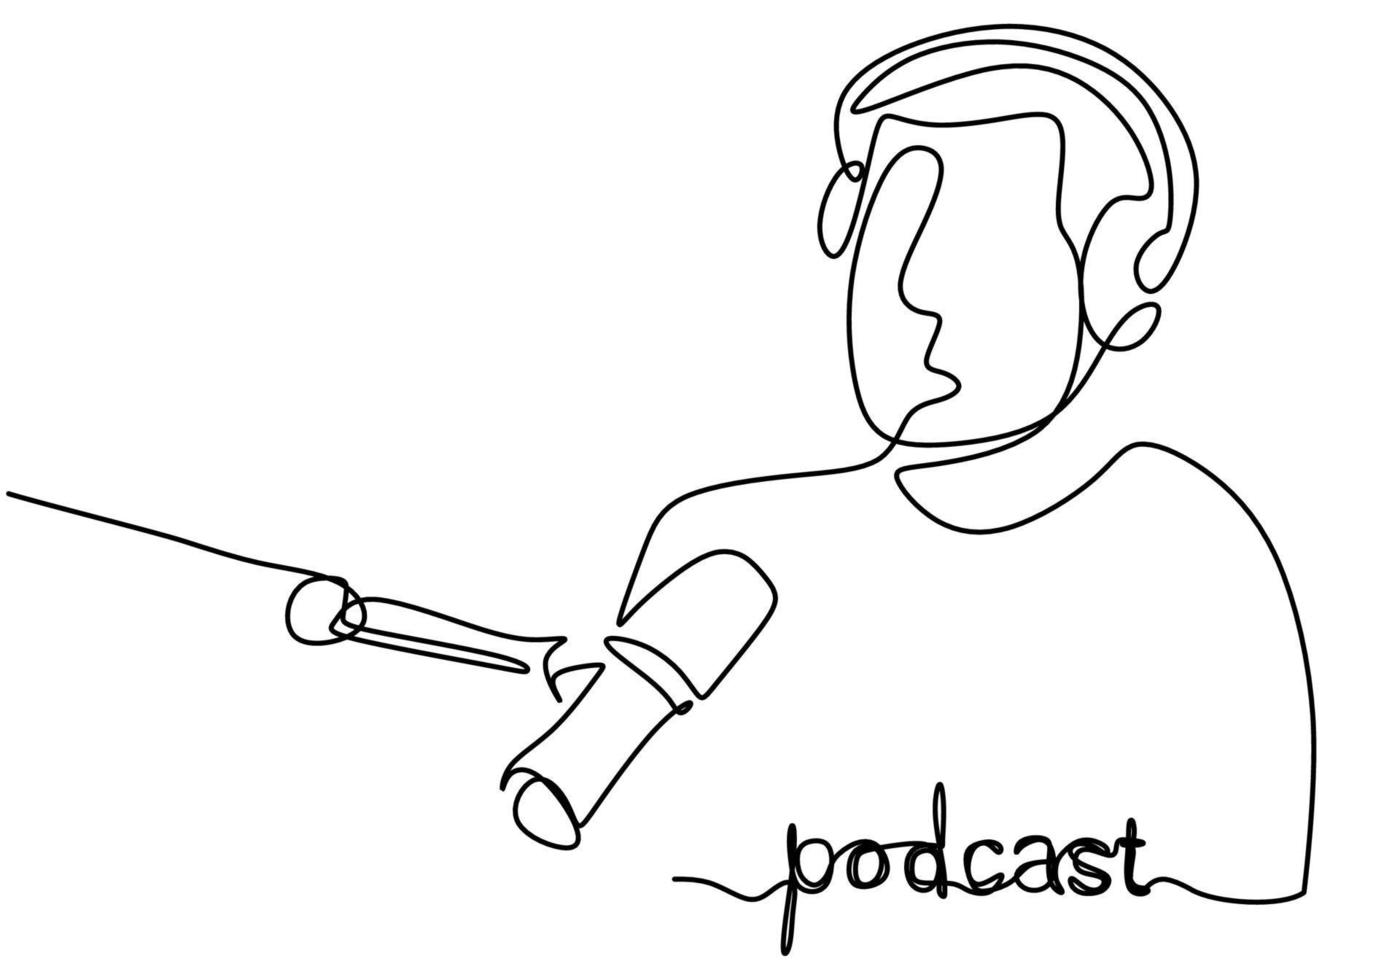 hombre de podcast de dibujo de línea continua. hombre joven como presentador o podcast invitado habla por un micrófono. vector